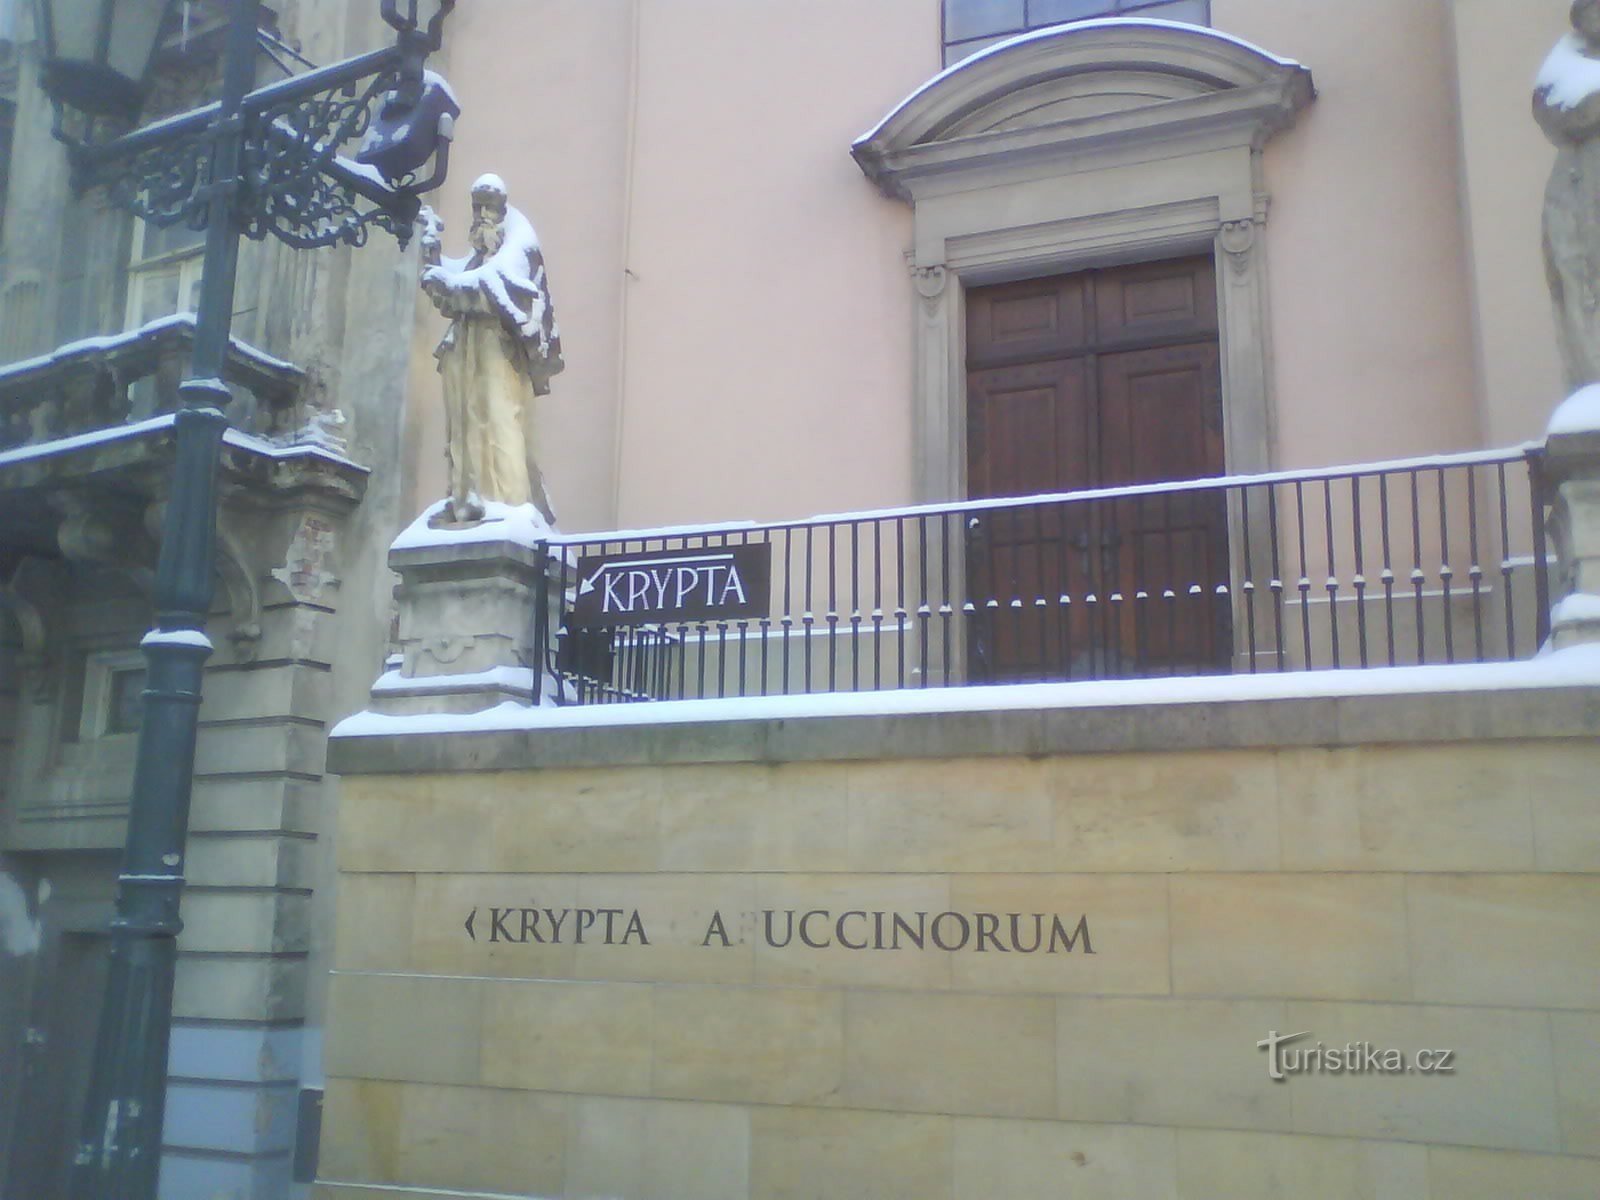 Hầm mộ Capuchin ở Brno